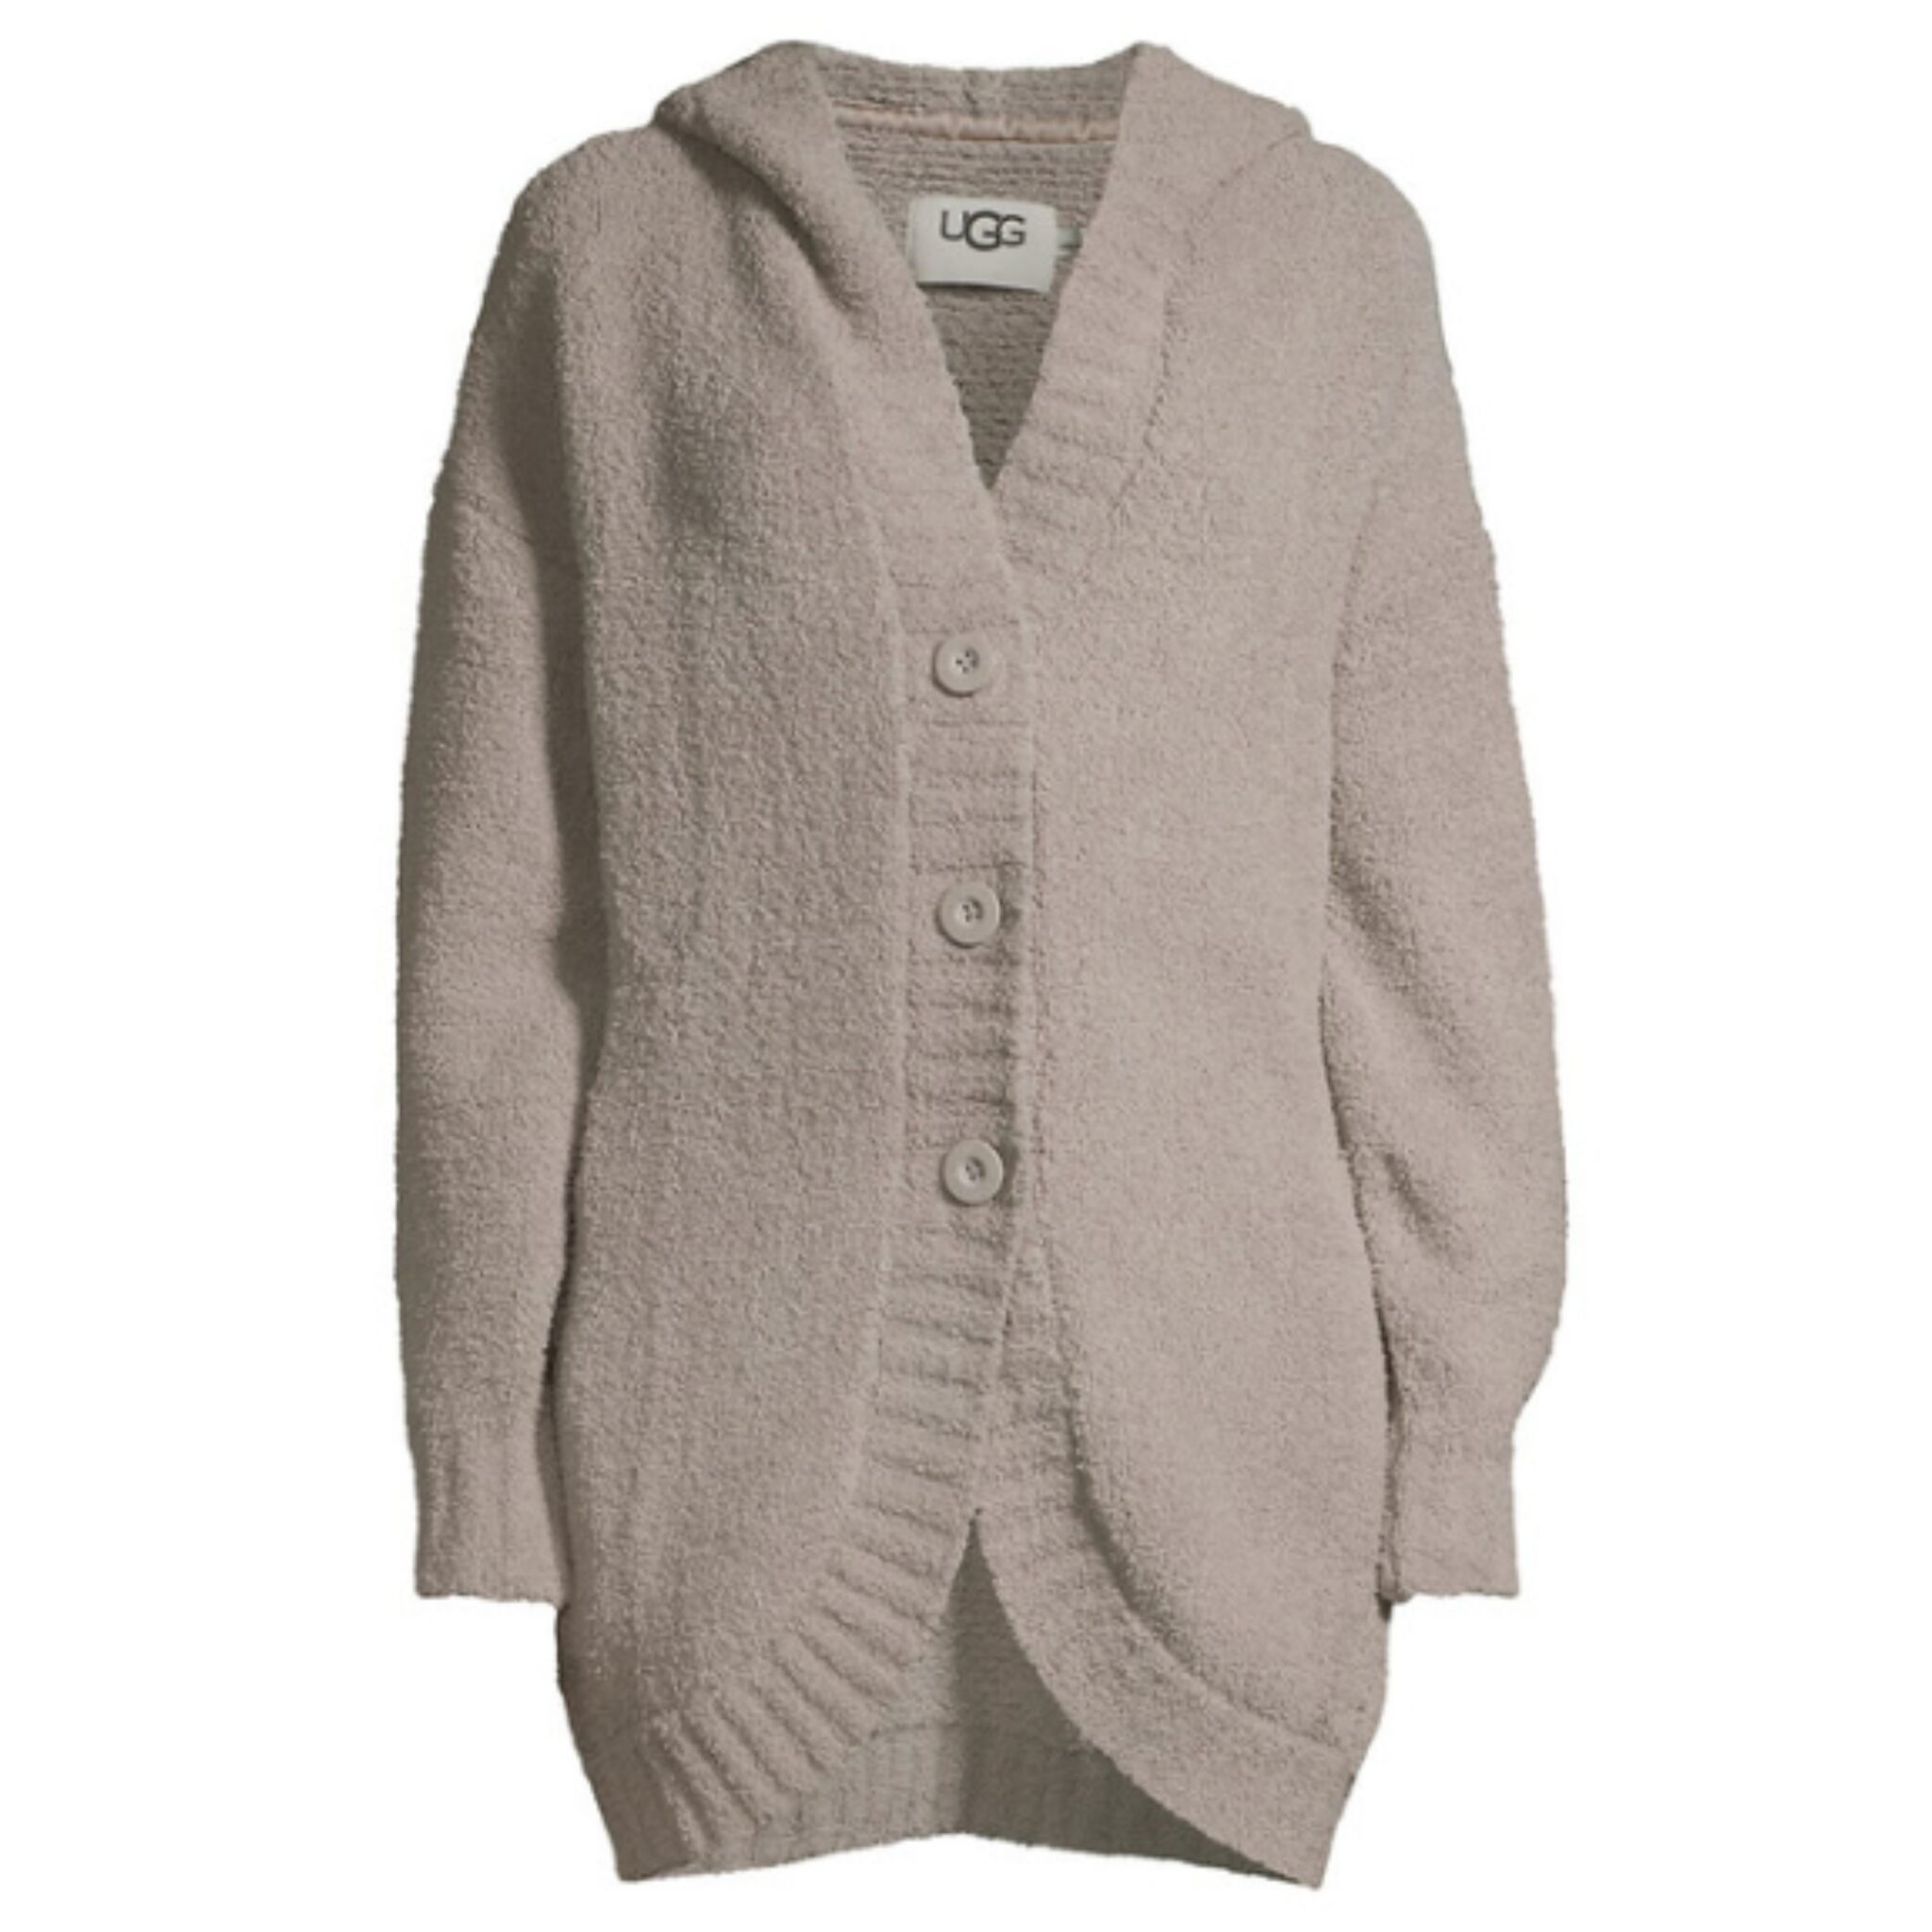 Ugg Sweater Gray